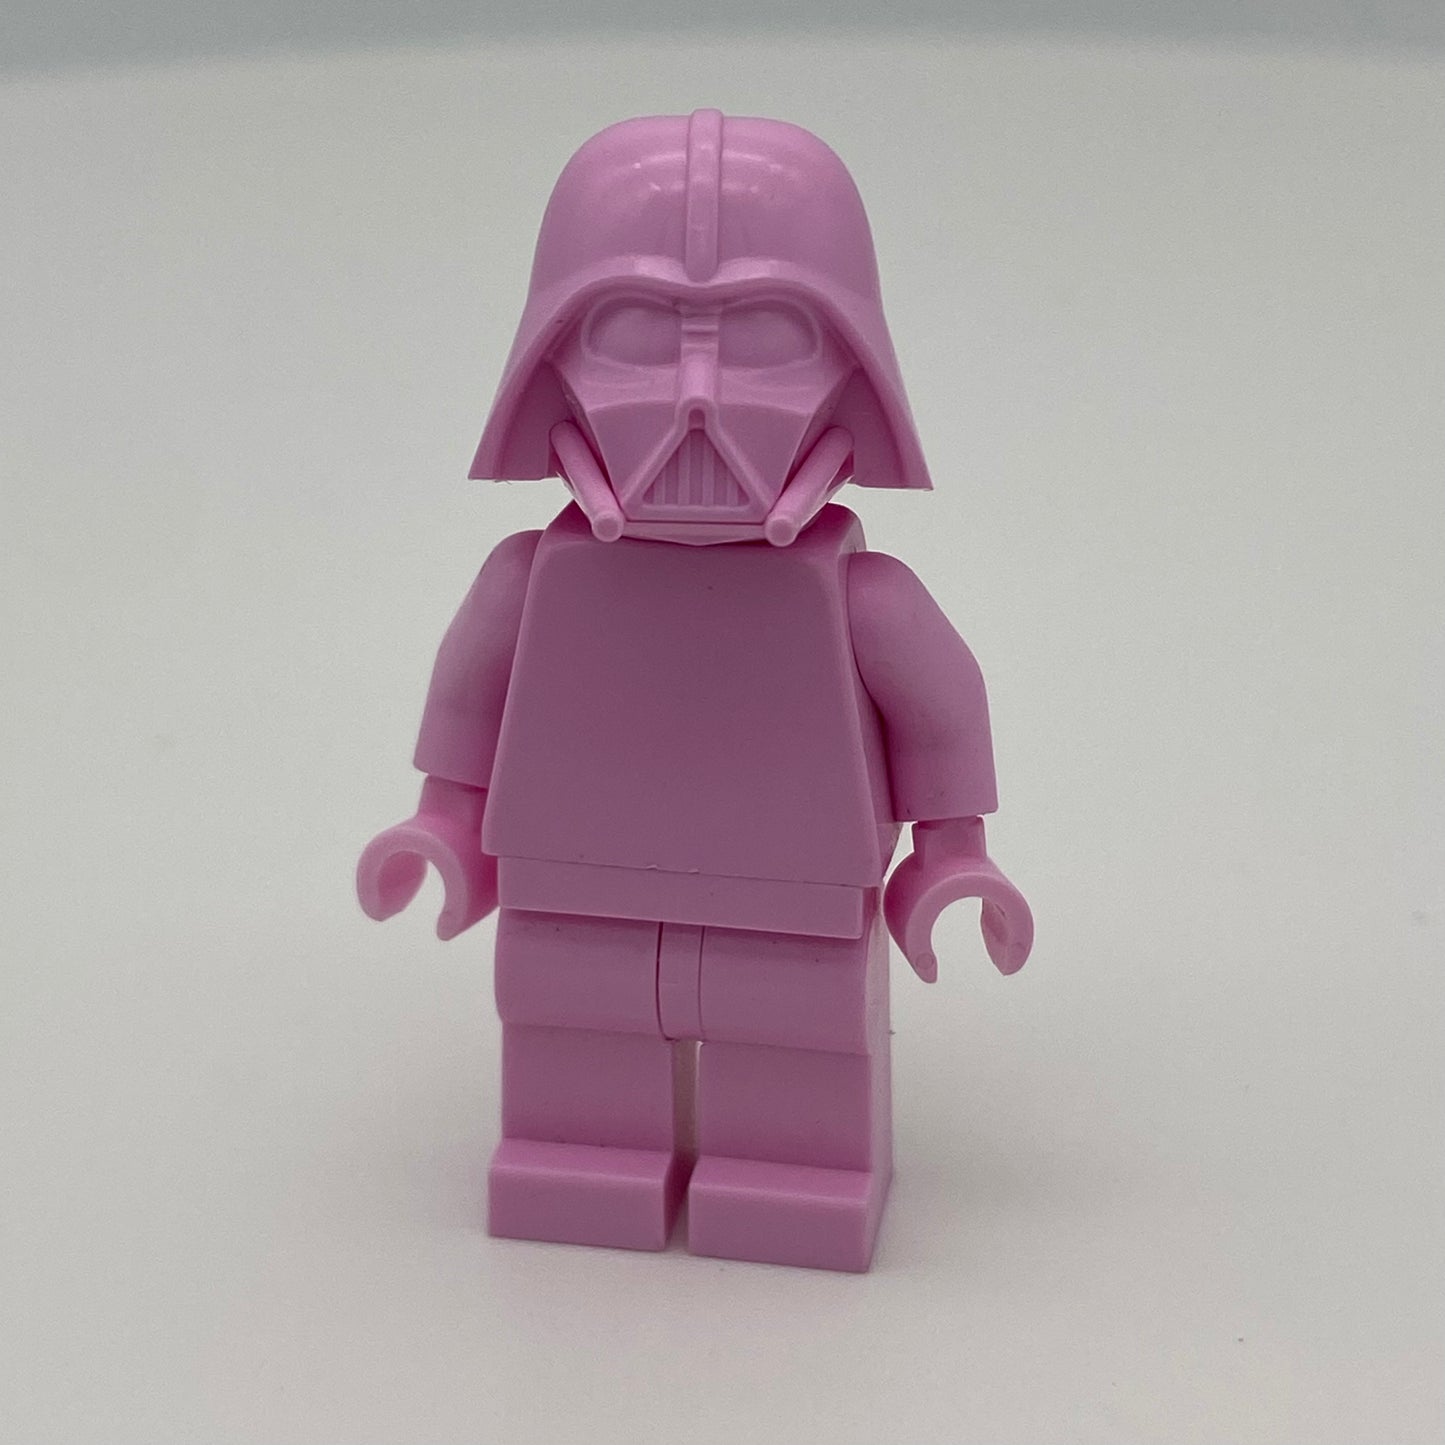 Prototype Pink Darth Vader Monochrome - Authentic Lego Minifigure